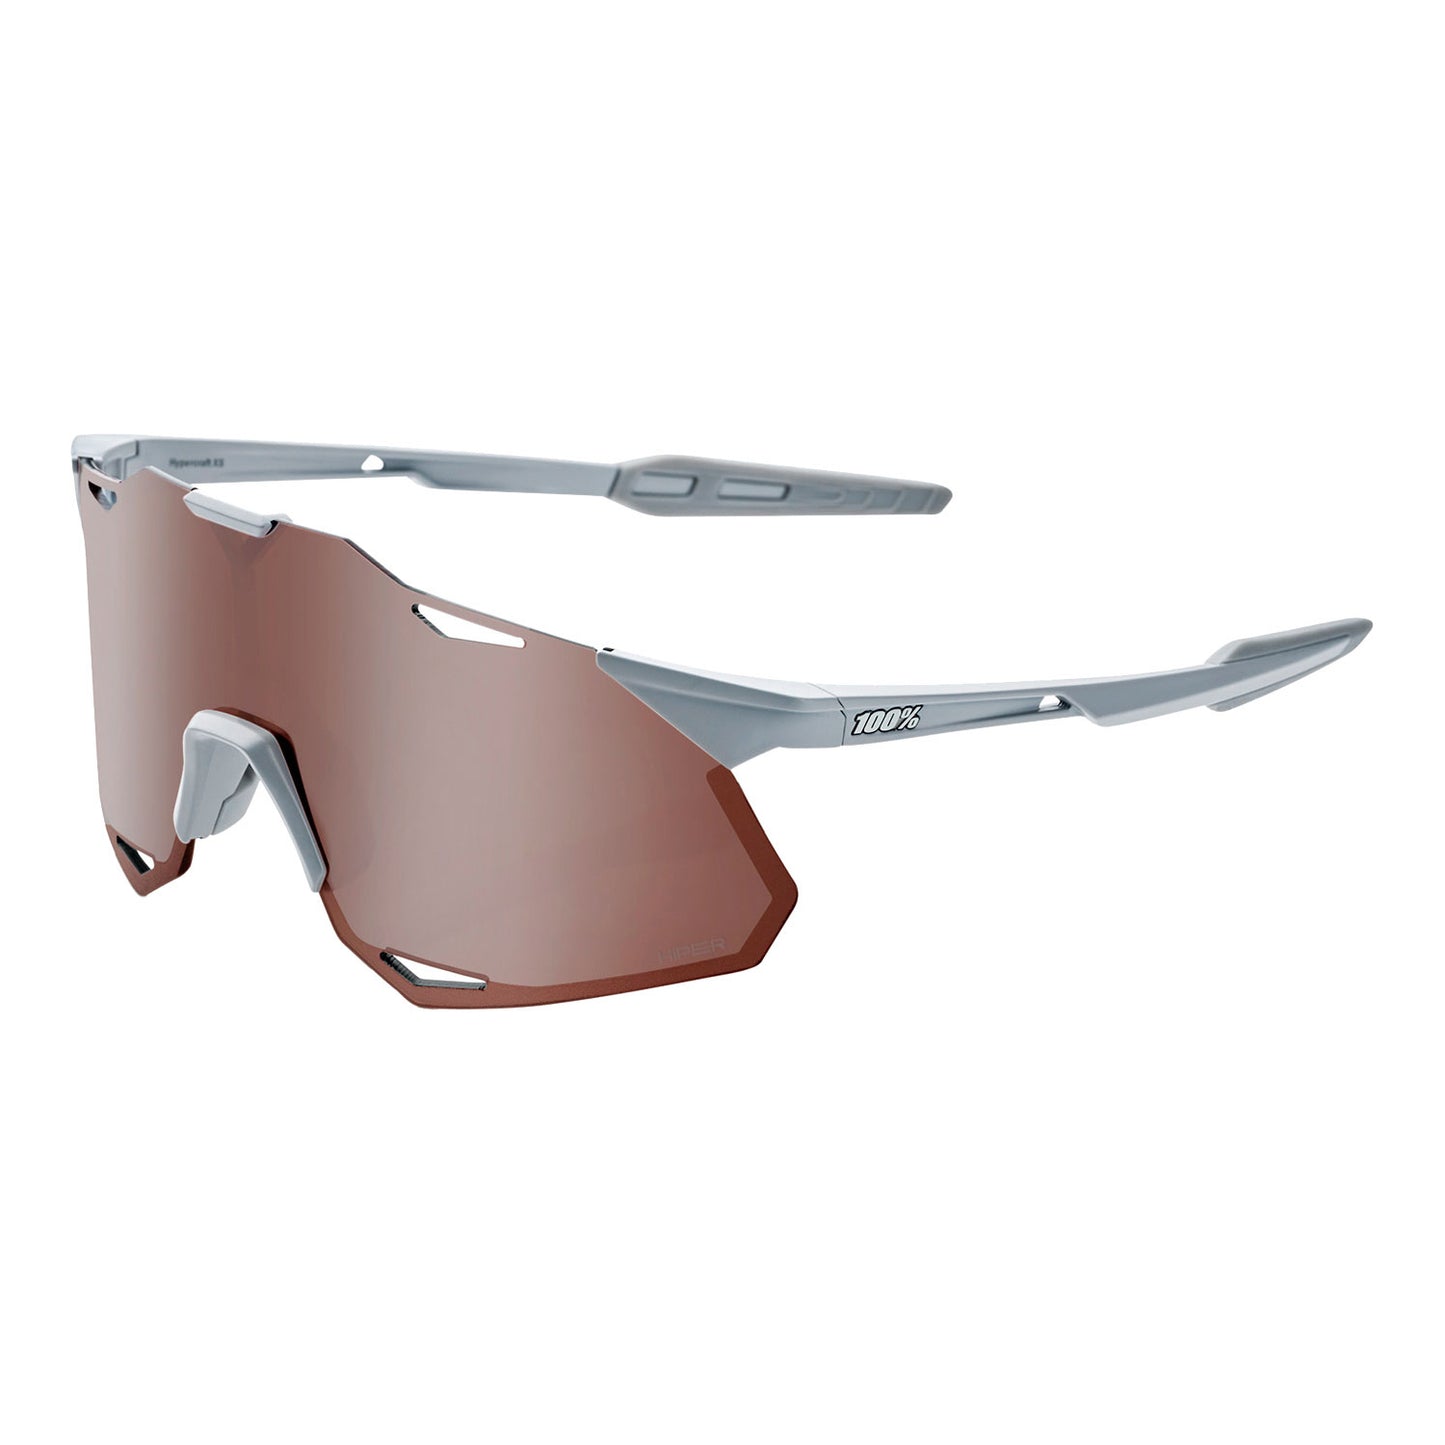 100 Percent Hypercraft XS Sunglasses - Matte Stone Grey - HiPER Crimson Silver Mirror Lens